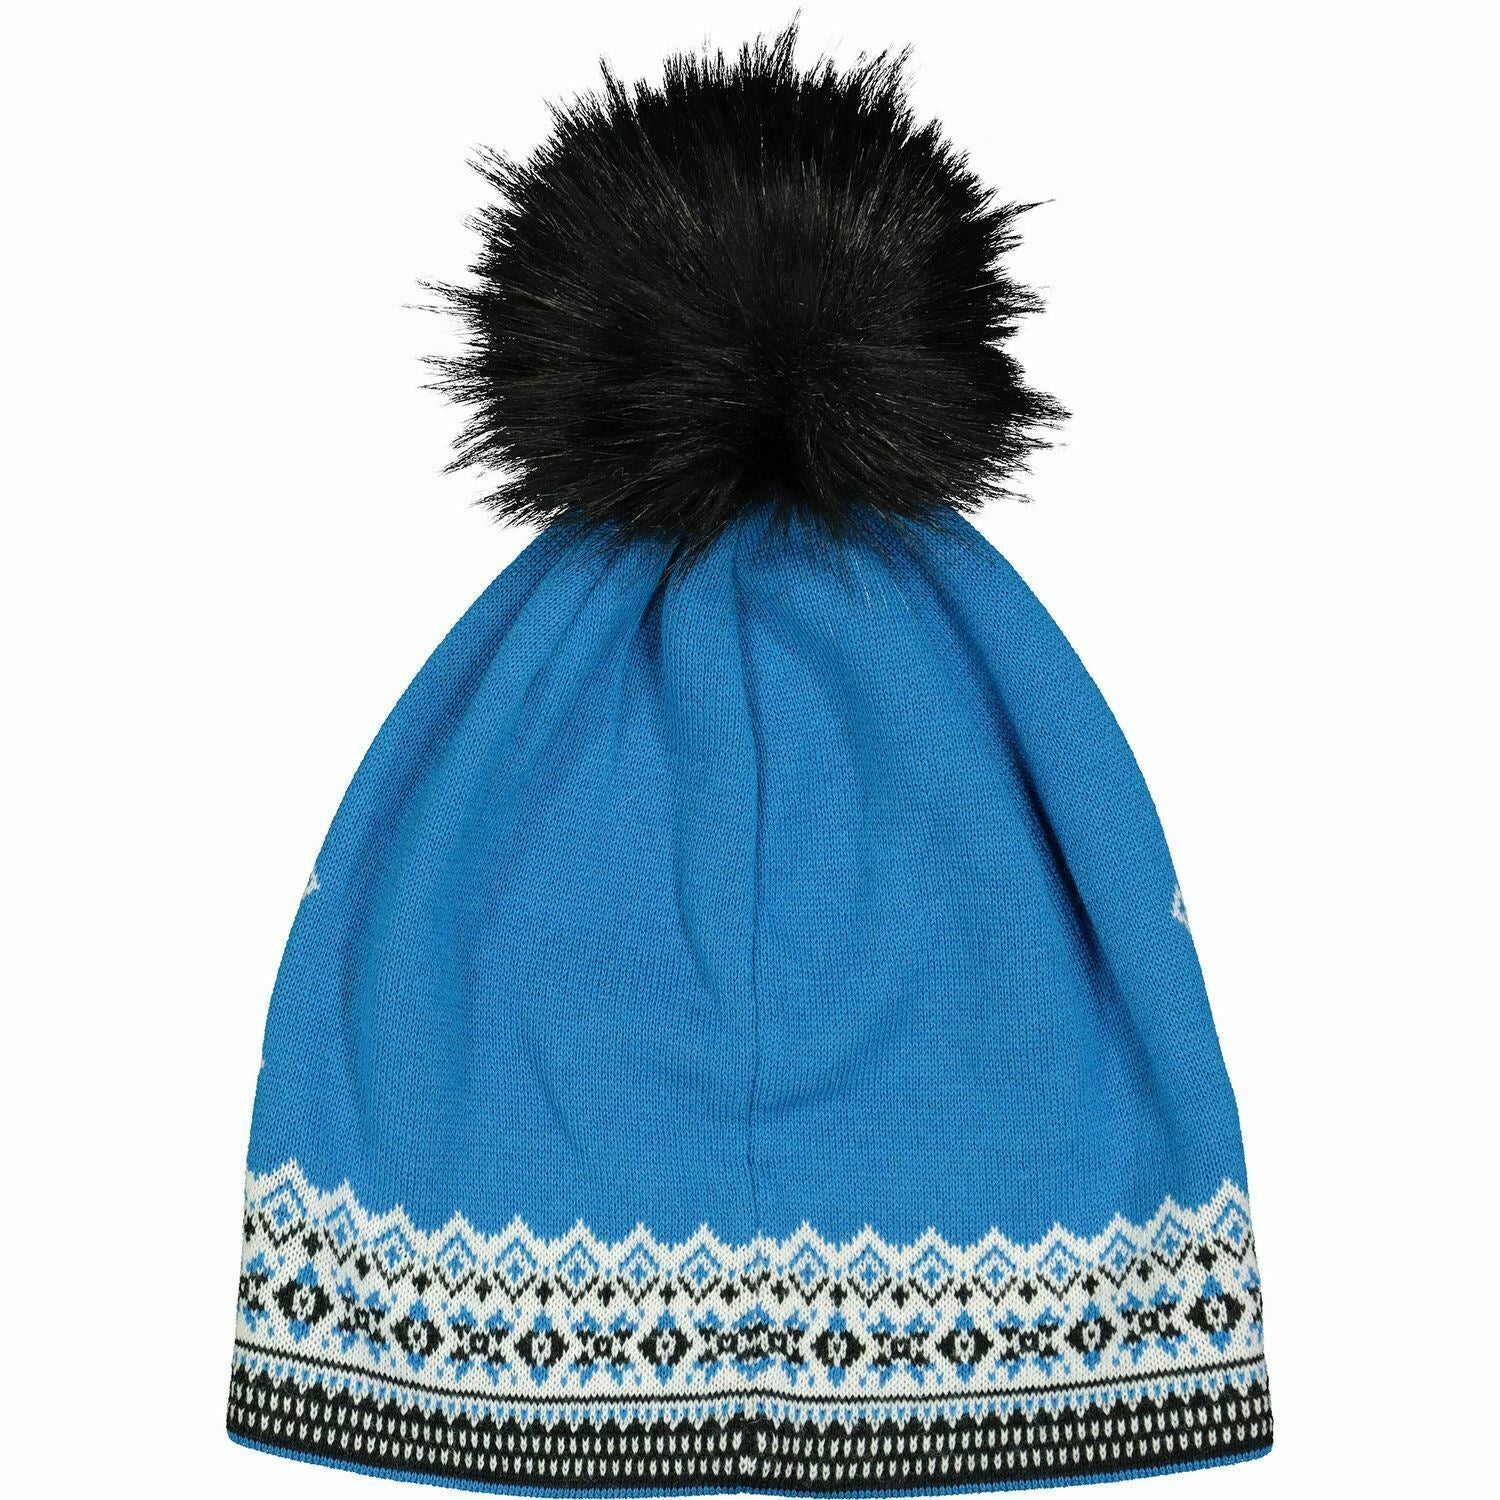 Mens EISBAR Ski Hat Winter Beanie Hat Merino Wool Mix Black/Blue One Size Adult